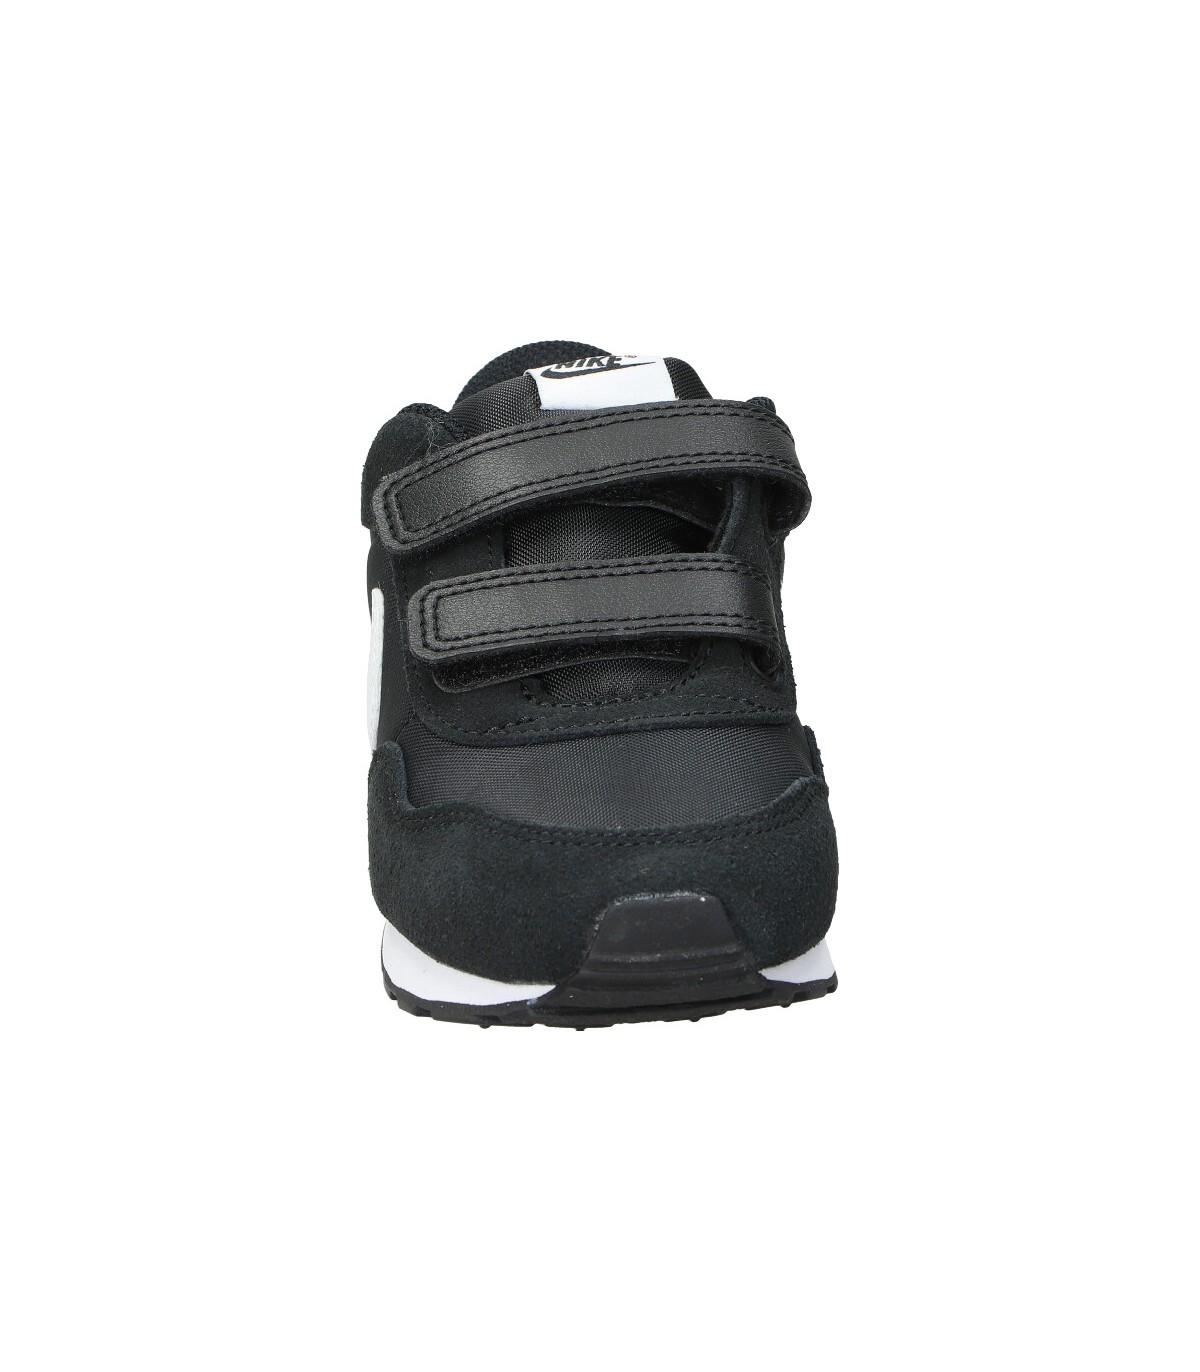 Zapatillas niño plana NIKE cn8560-002 negro